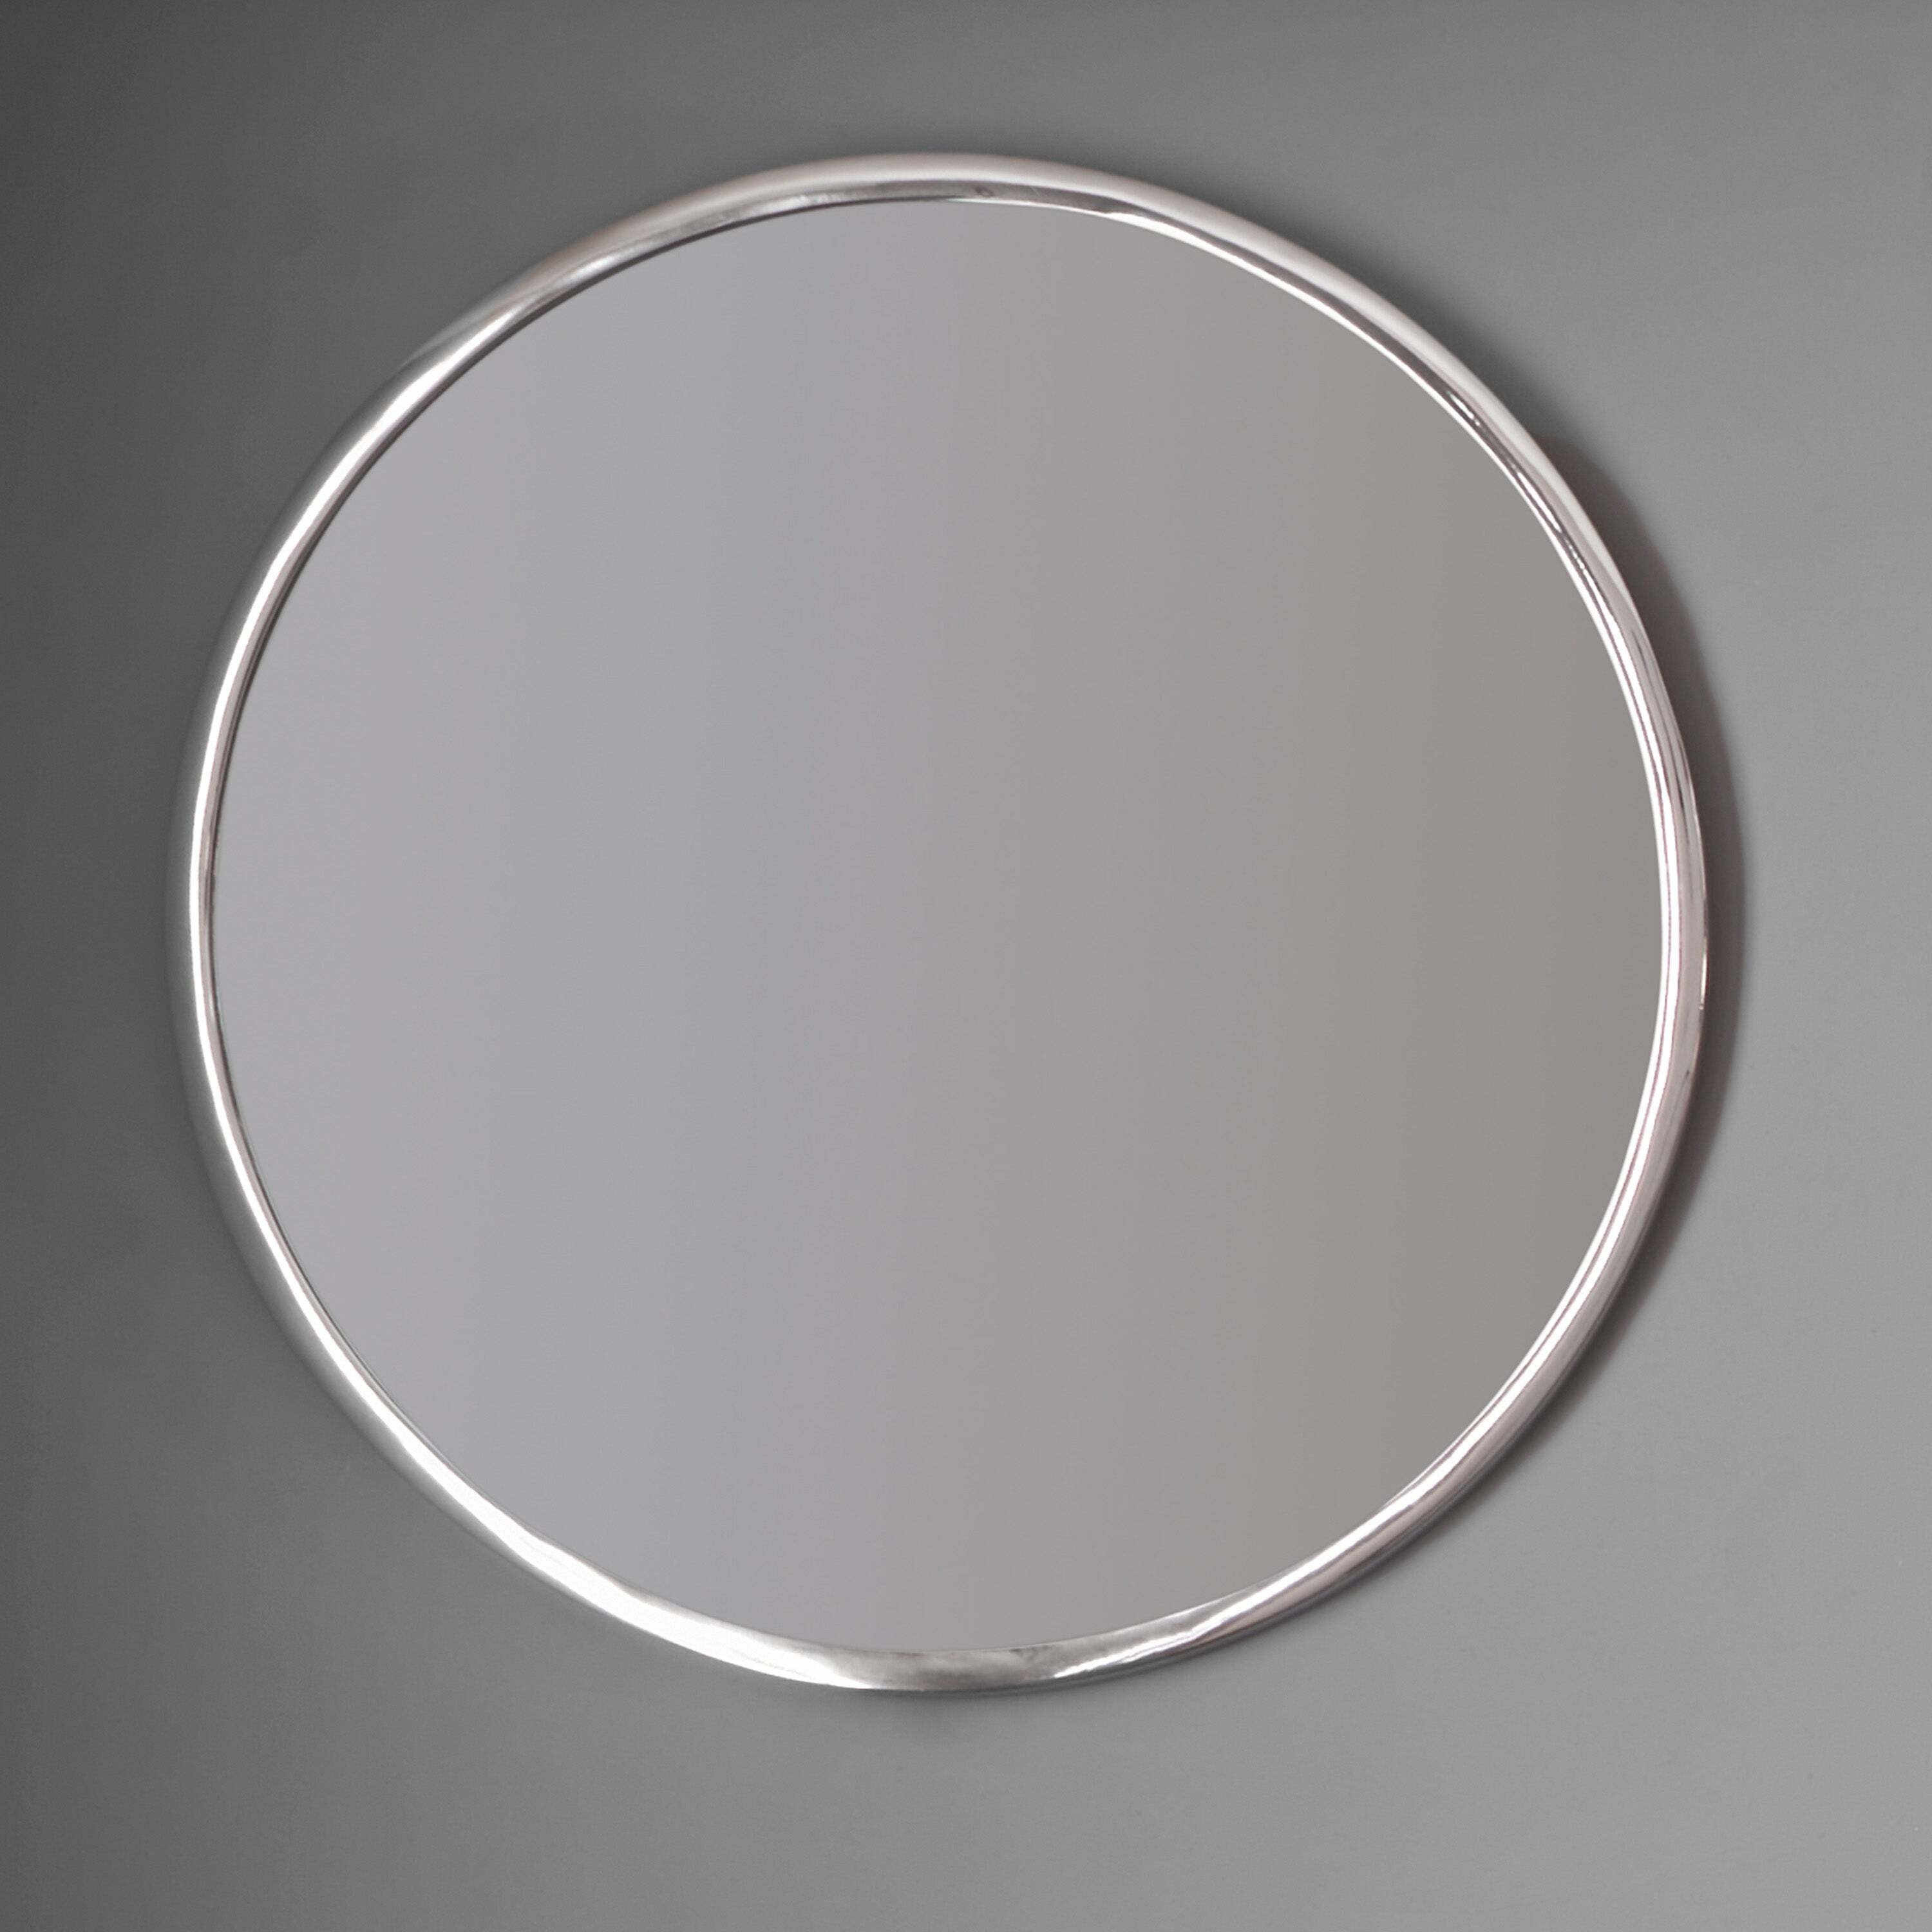 Metal Round Wall Mirror, Silver 61cm Silver